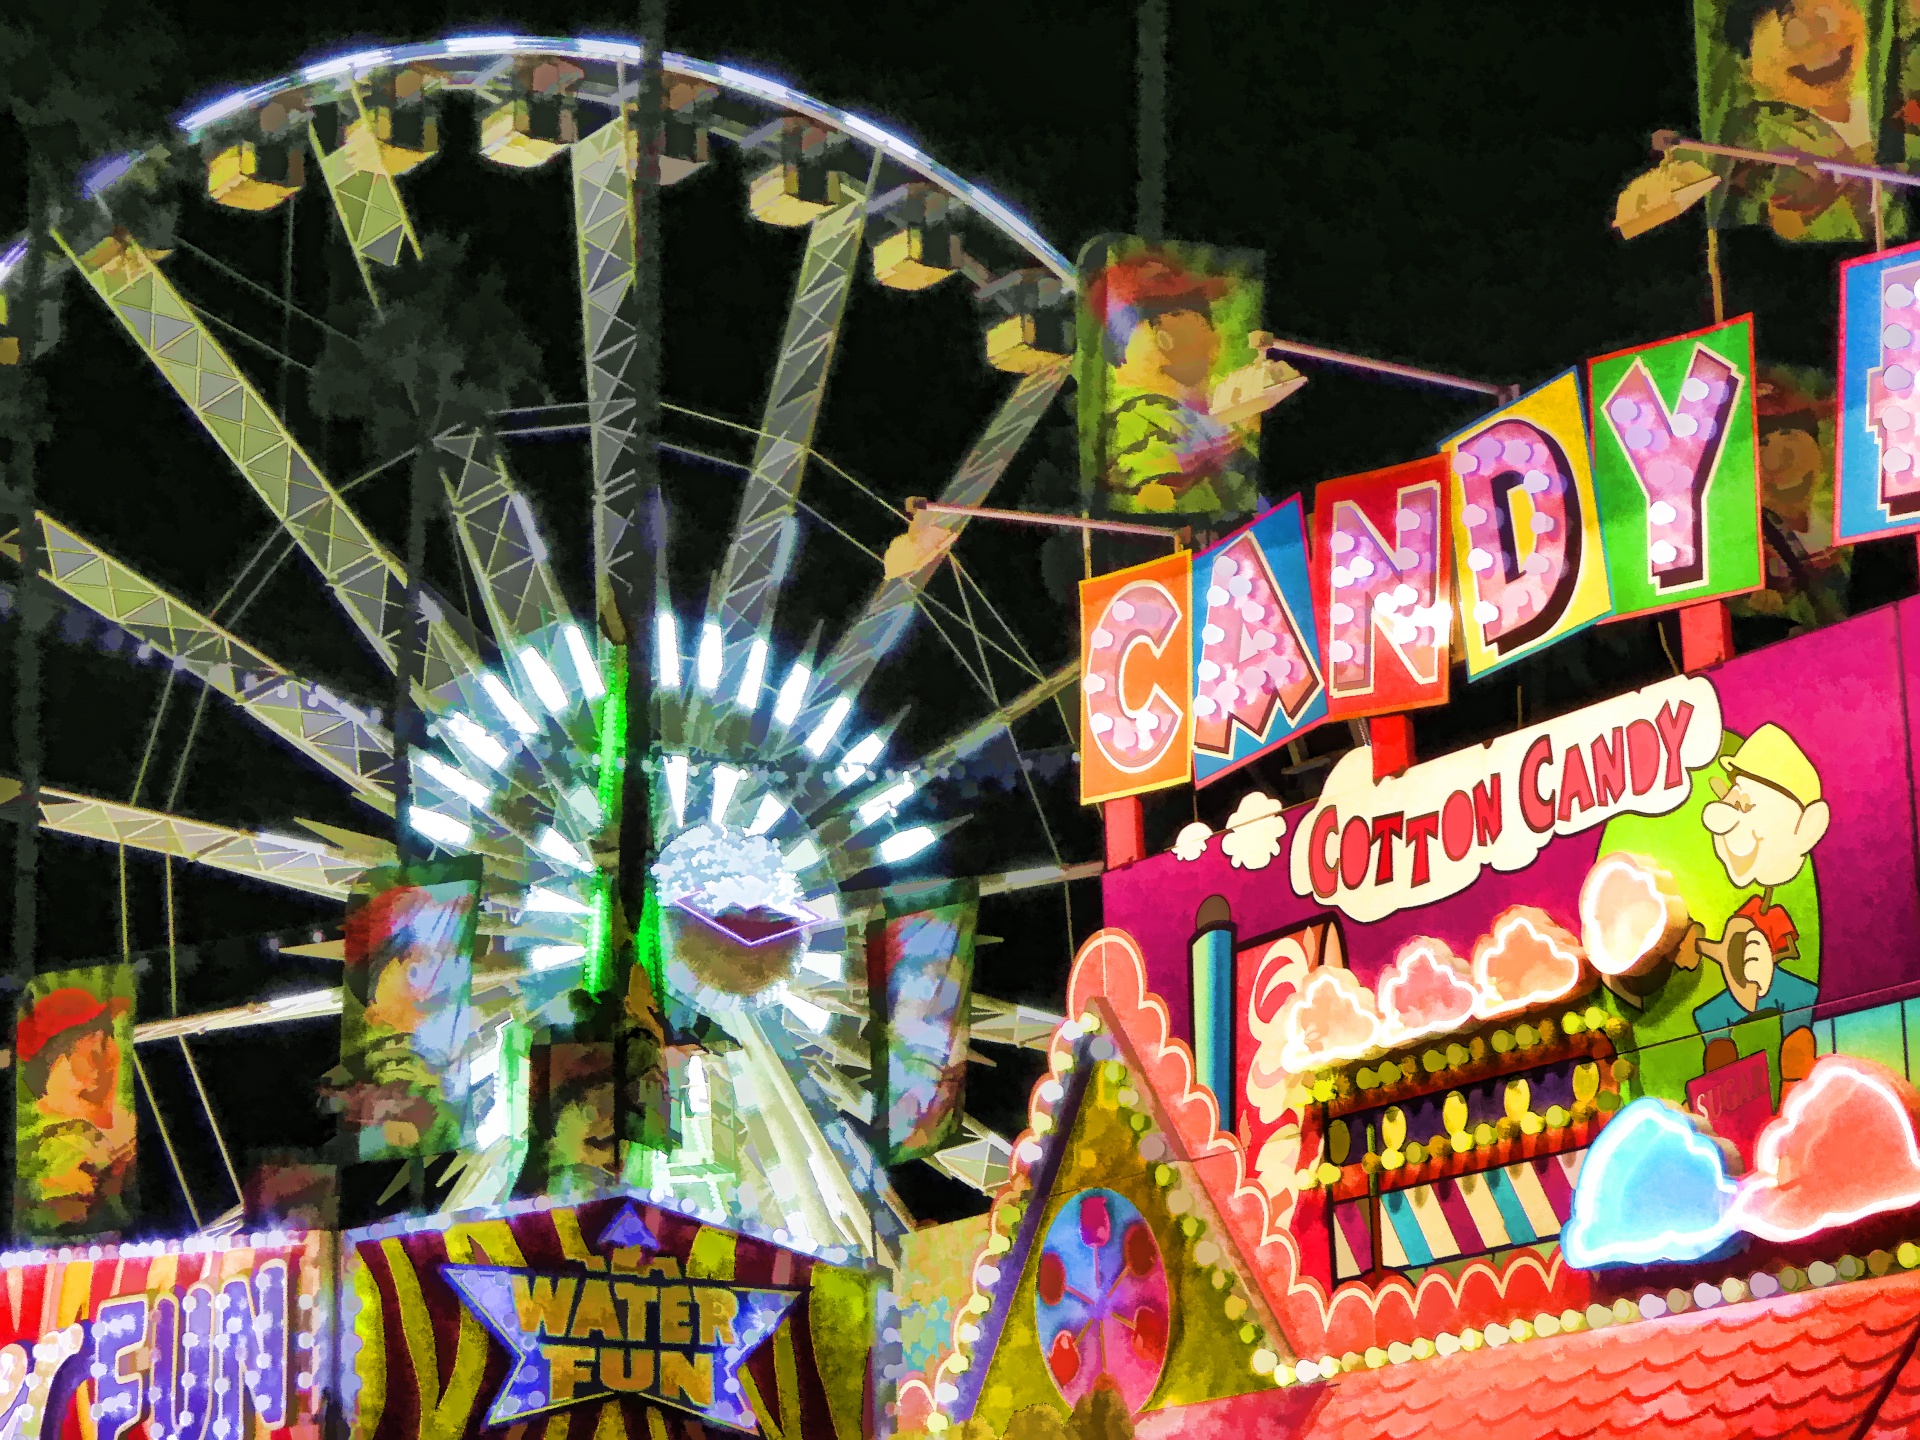 Ferris Wheel, Cotton Candy Stand, carnival fun